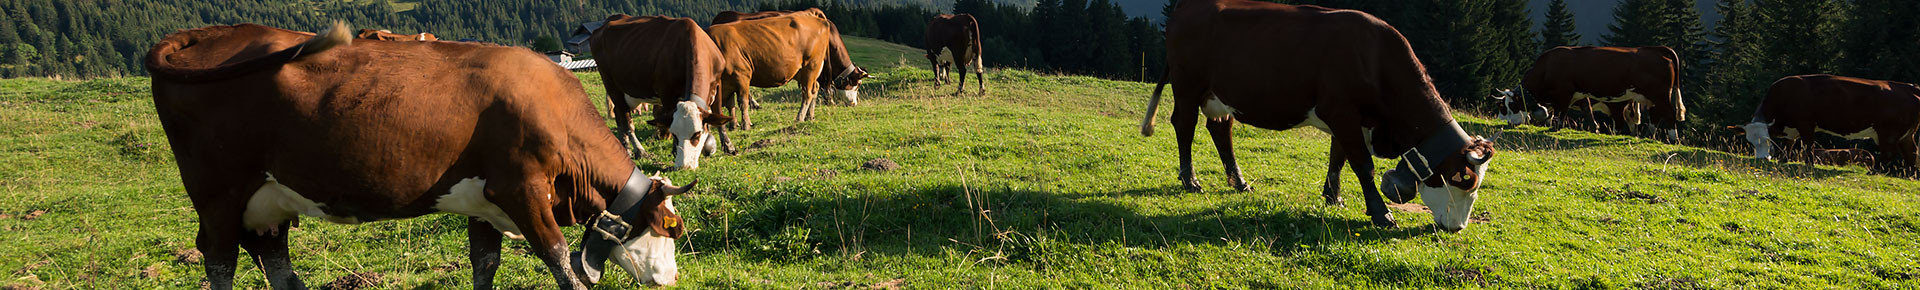 Abondance cows, Valley d'Aulps